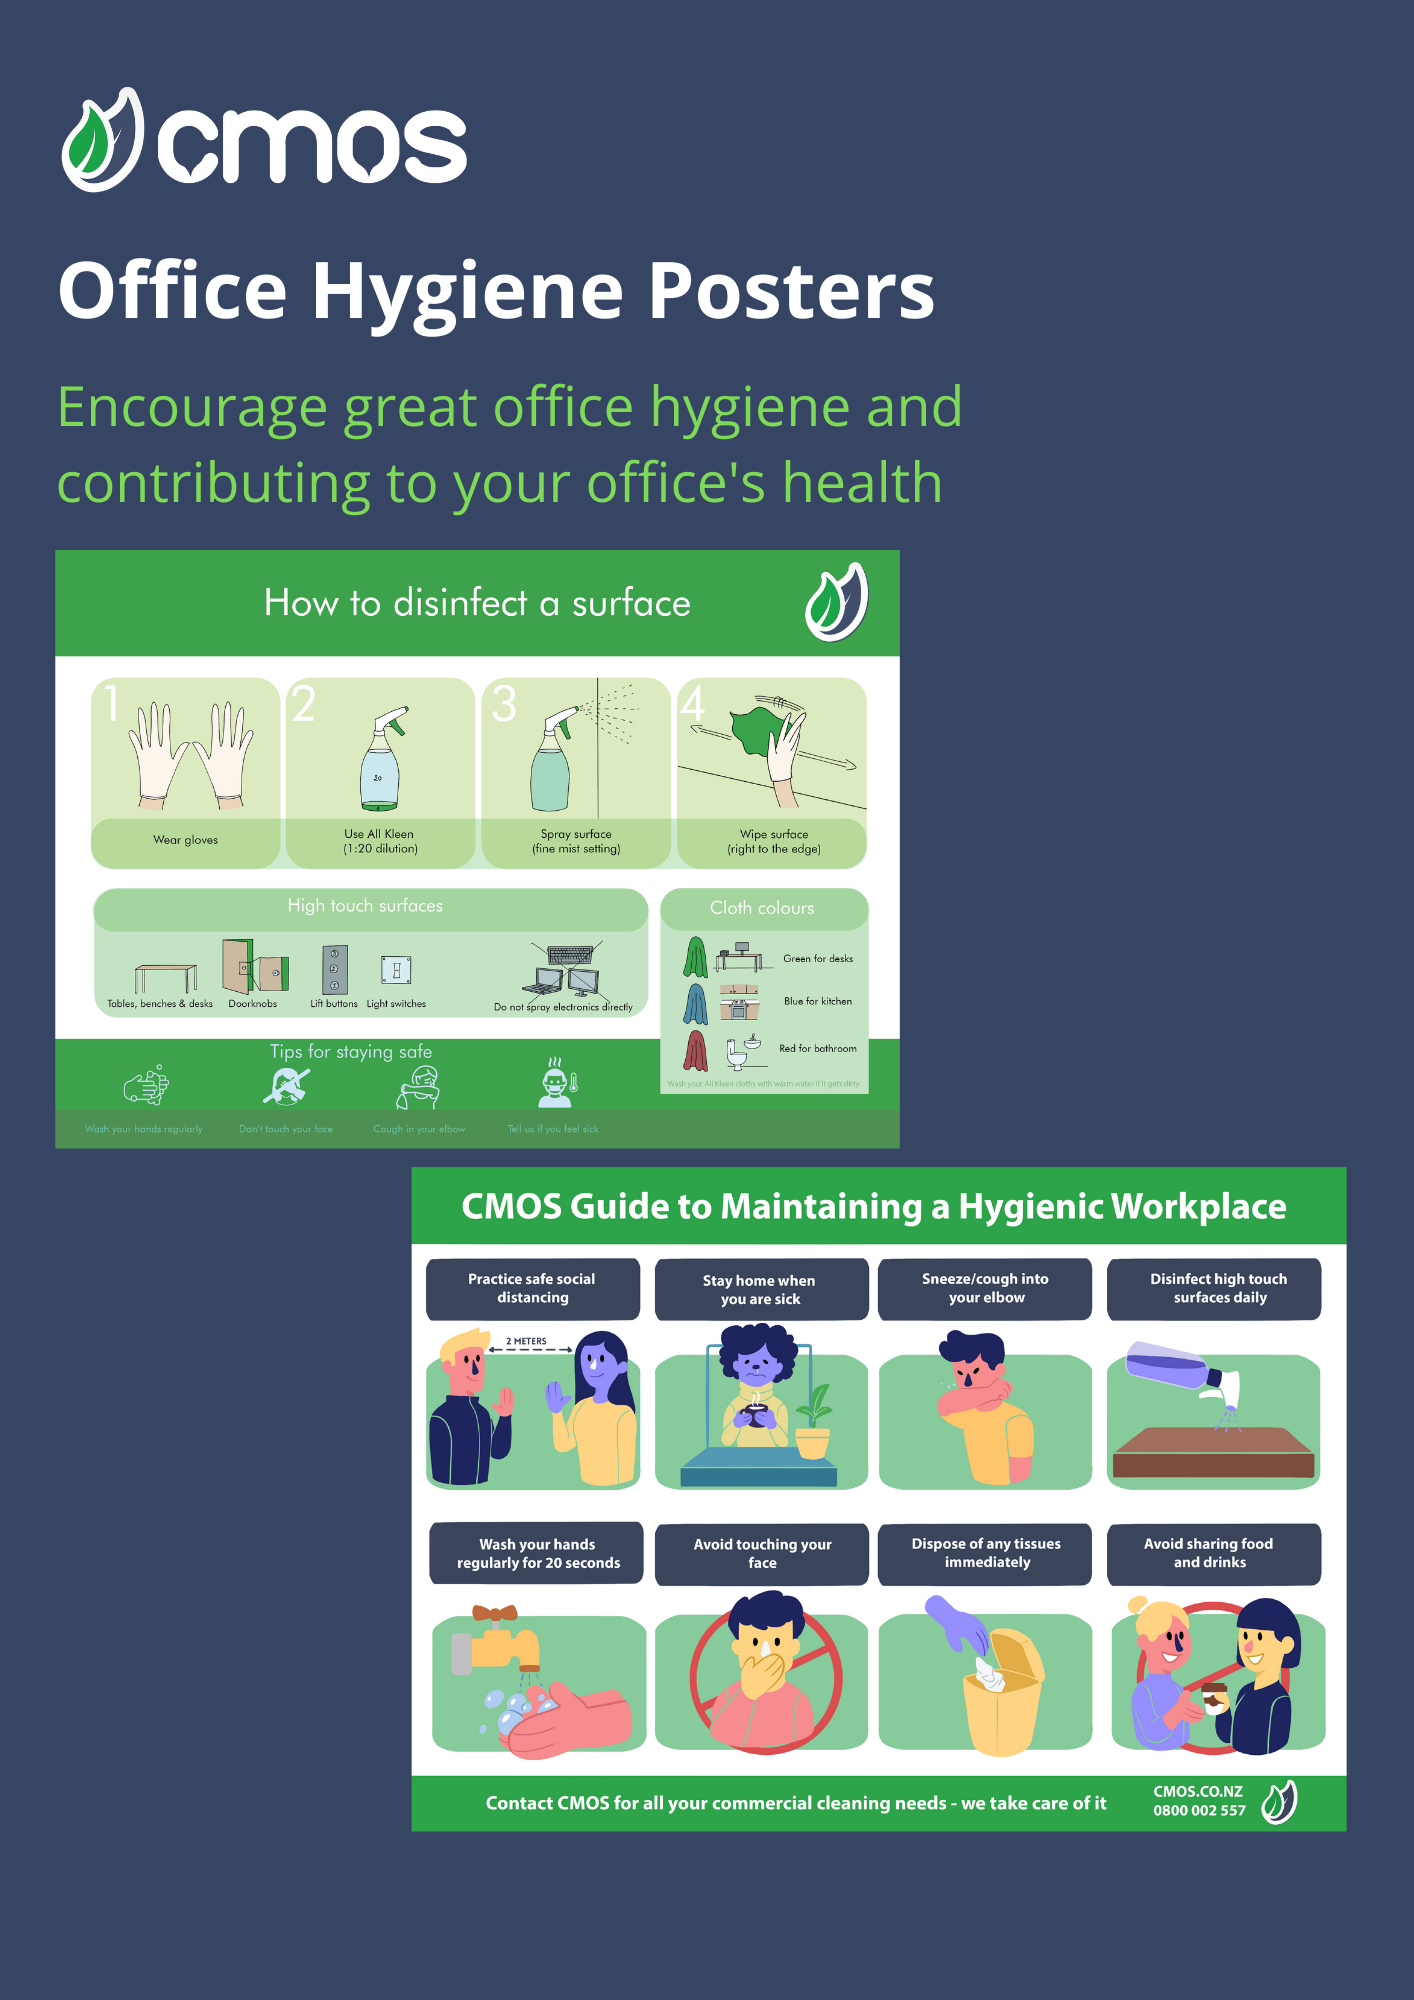 Office hygeine posters